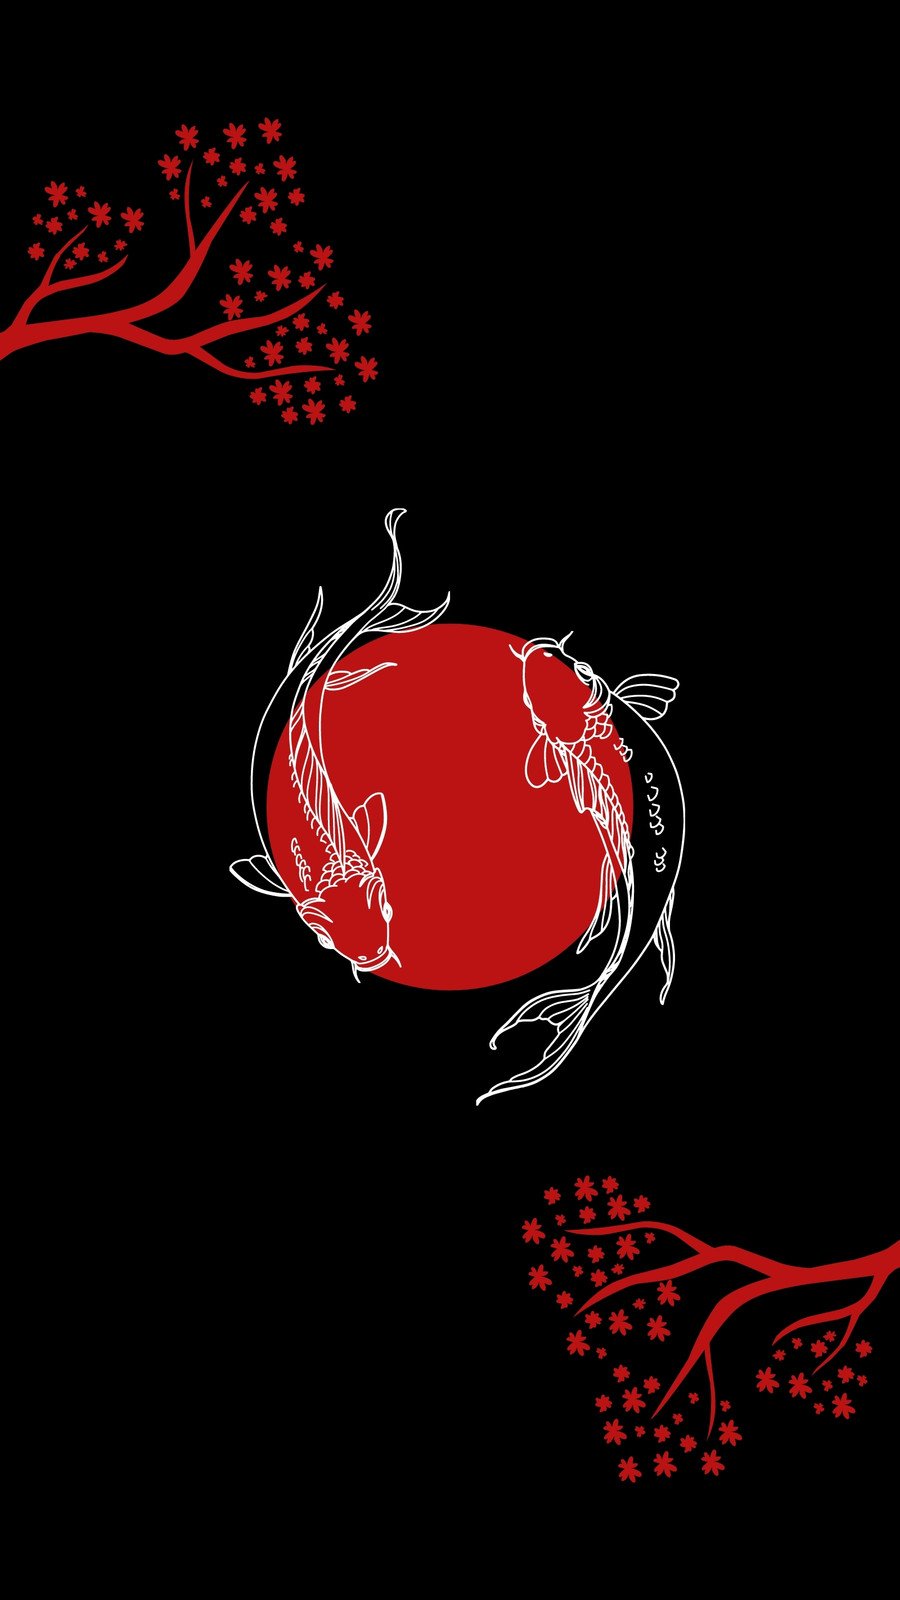 Bottins des œuvres Canva-black-red-white-fish-yin-yang-phone-wallpaper-v-TtqAP3bEU